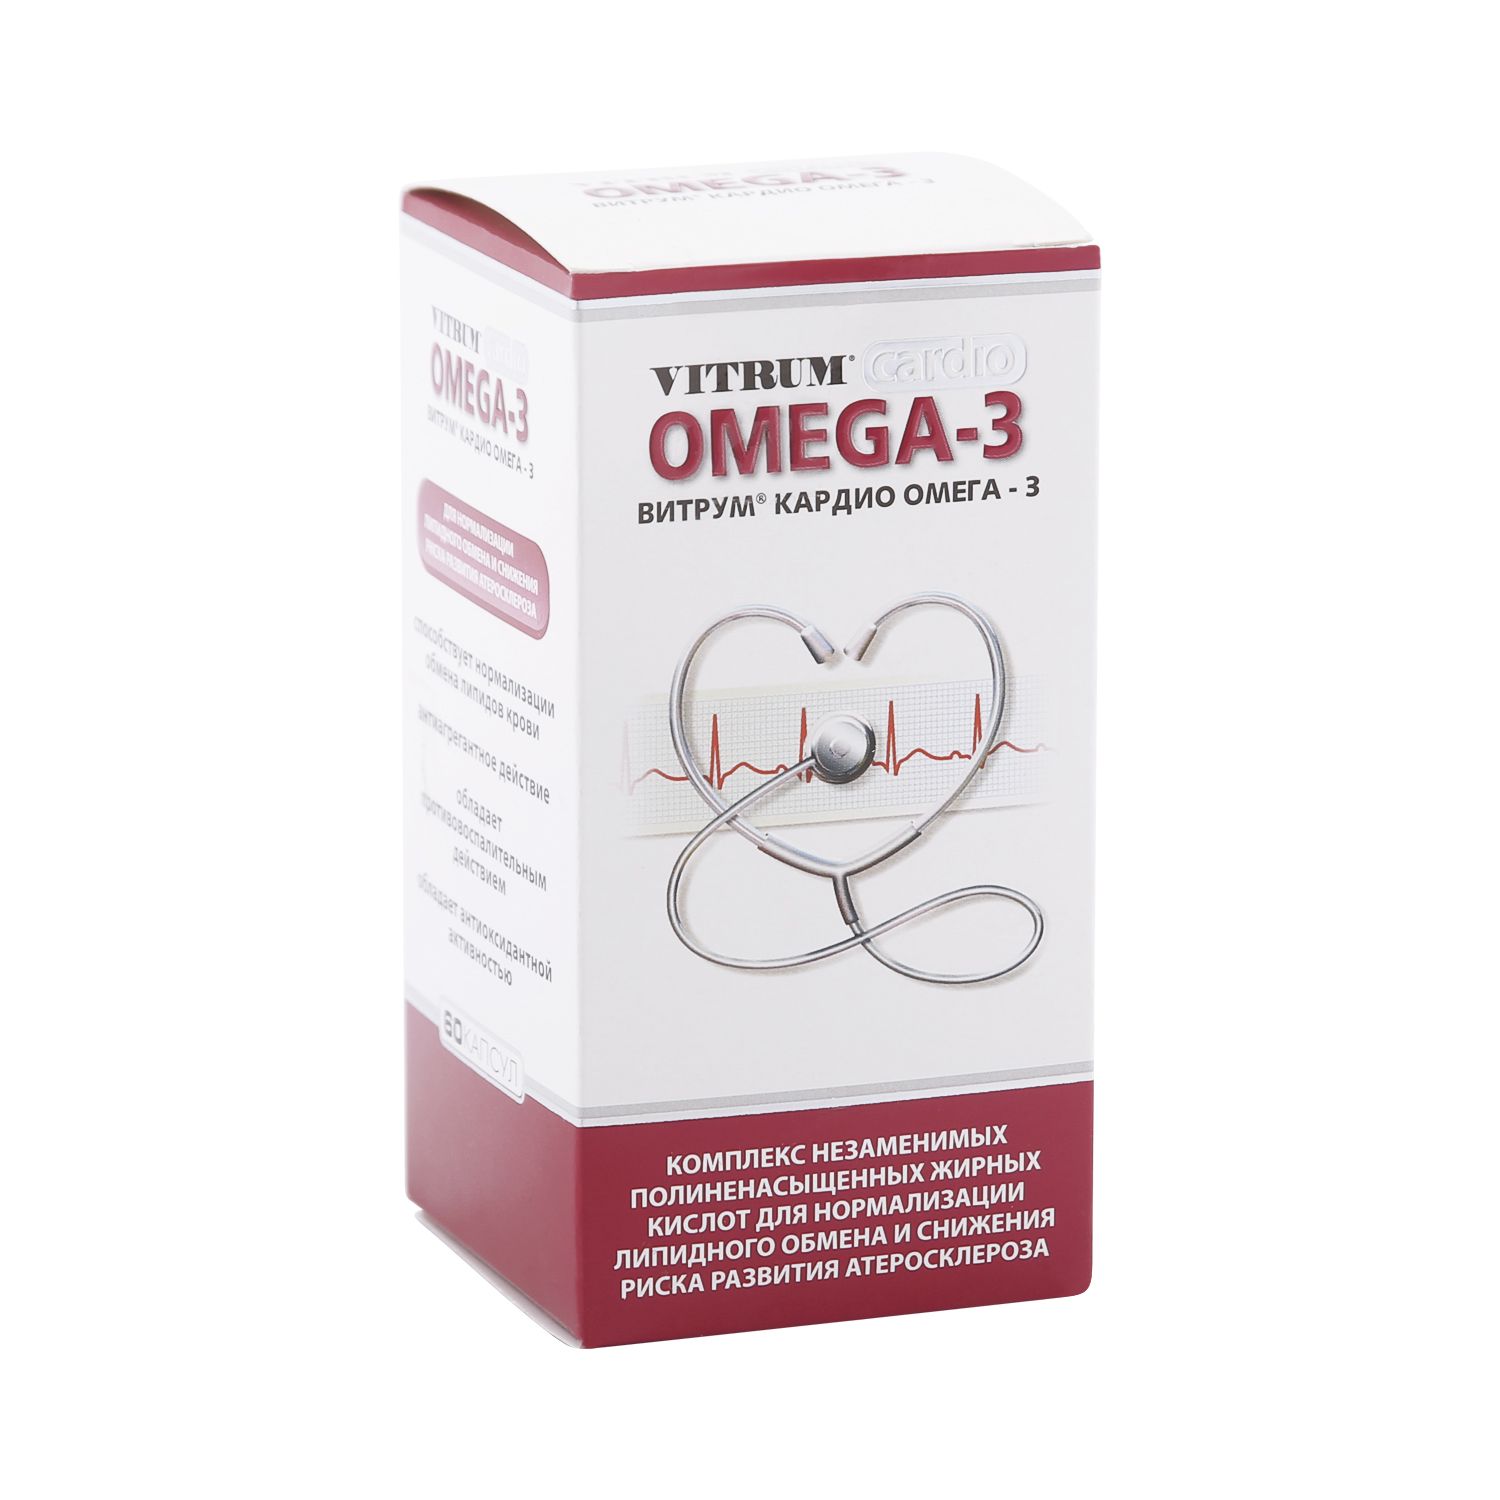 Омега после 60 лет. Omega 3 Cardio Max. Vitrum Cardio Omega-3. Витрум кардио Омега. Vitrum Cardio Омега-3 (Unipharm).